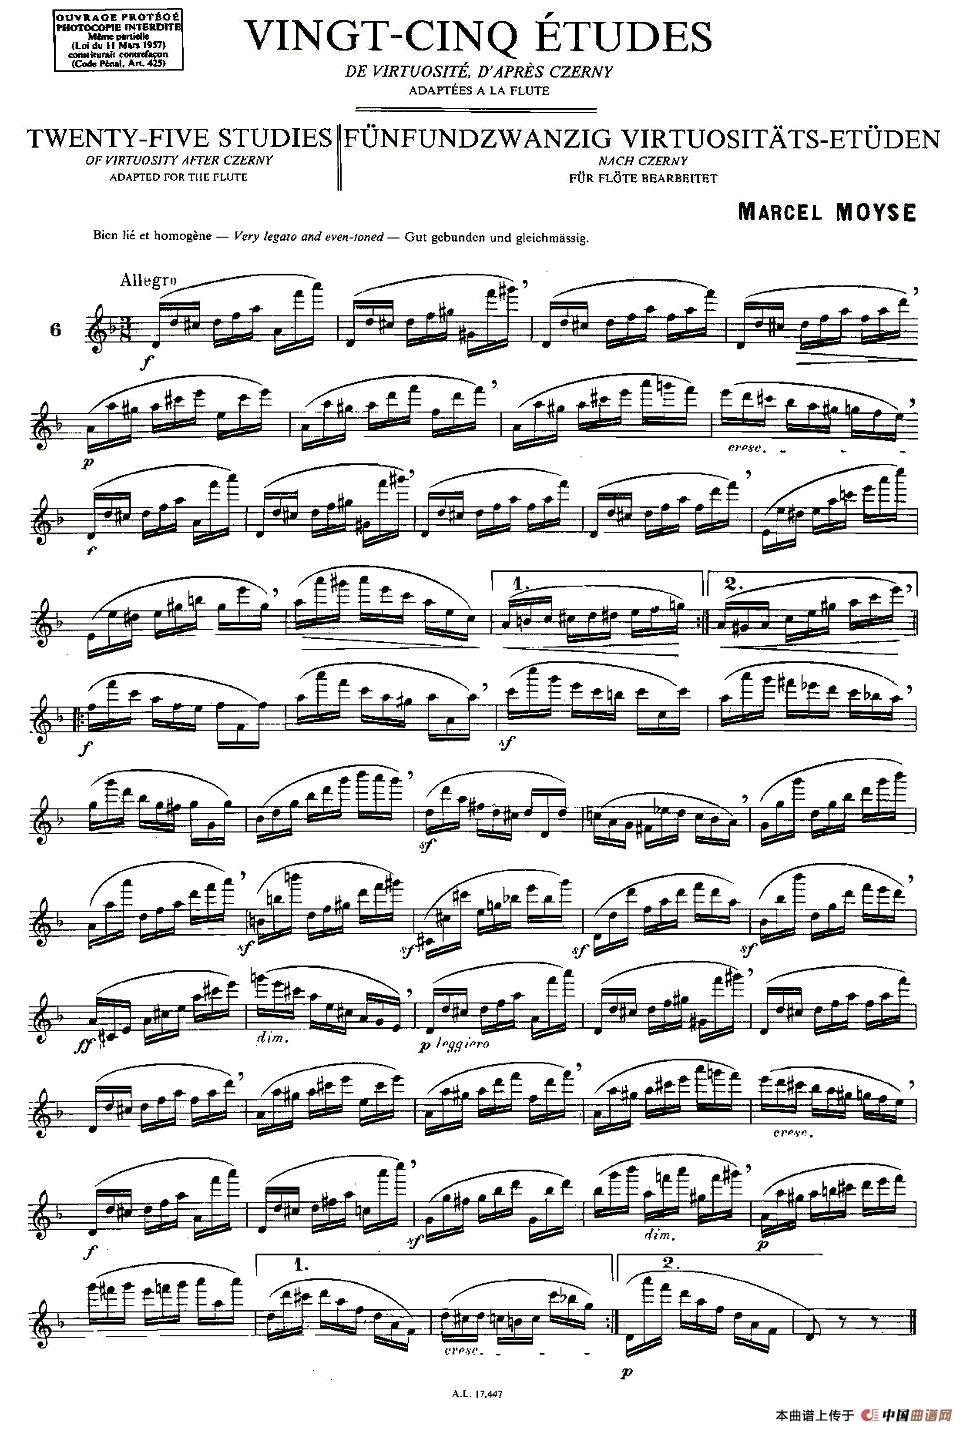 Moyse - 25 Studies after Czerny flute  [6]（25首改编自车尔